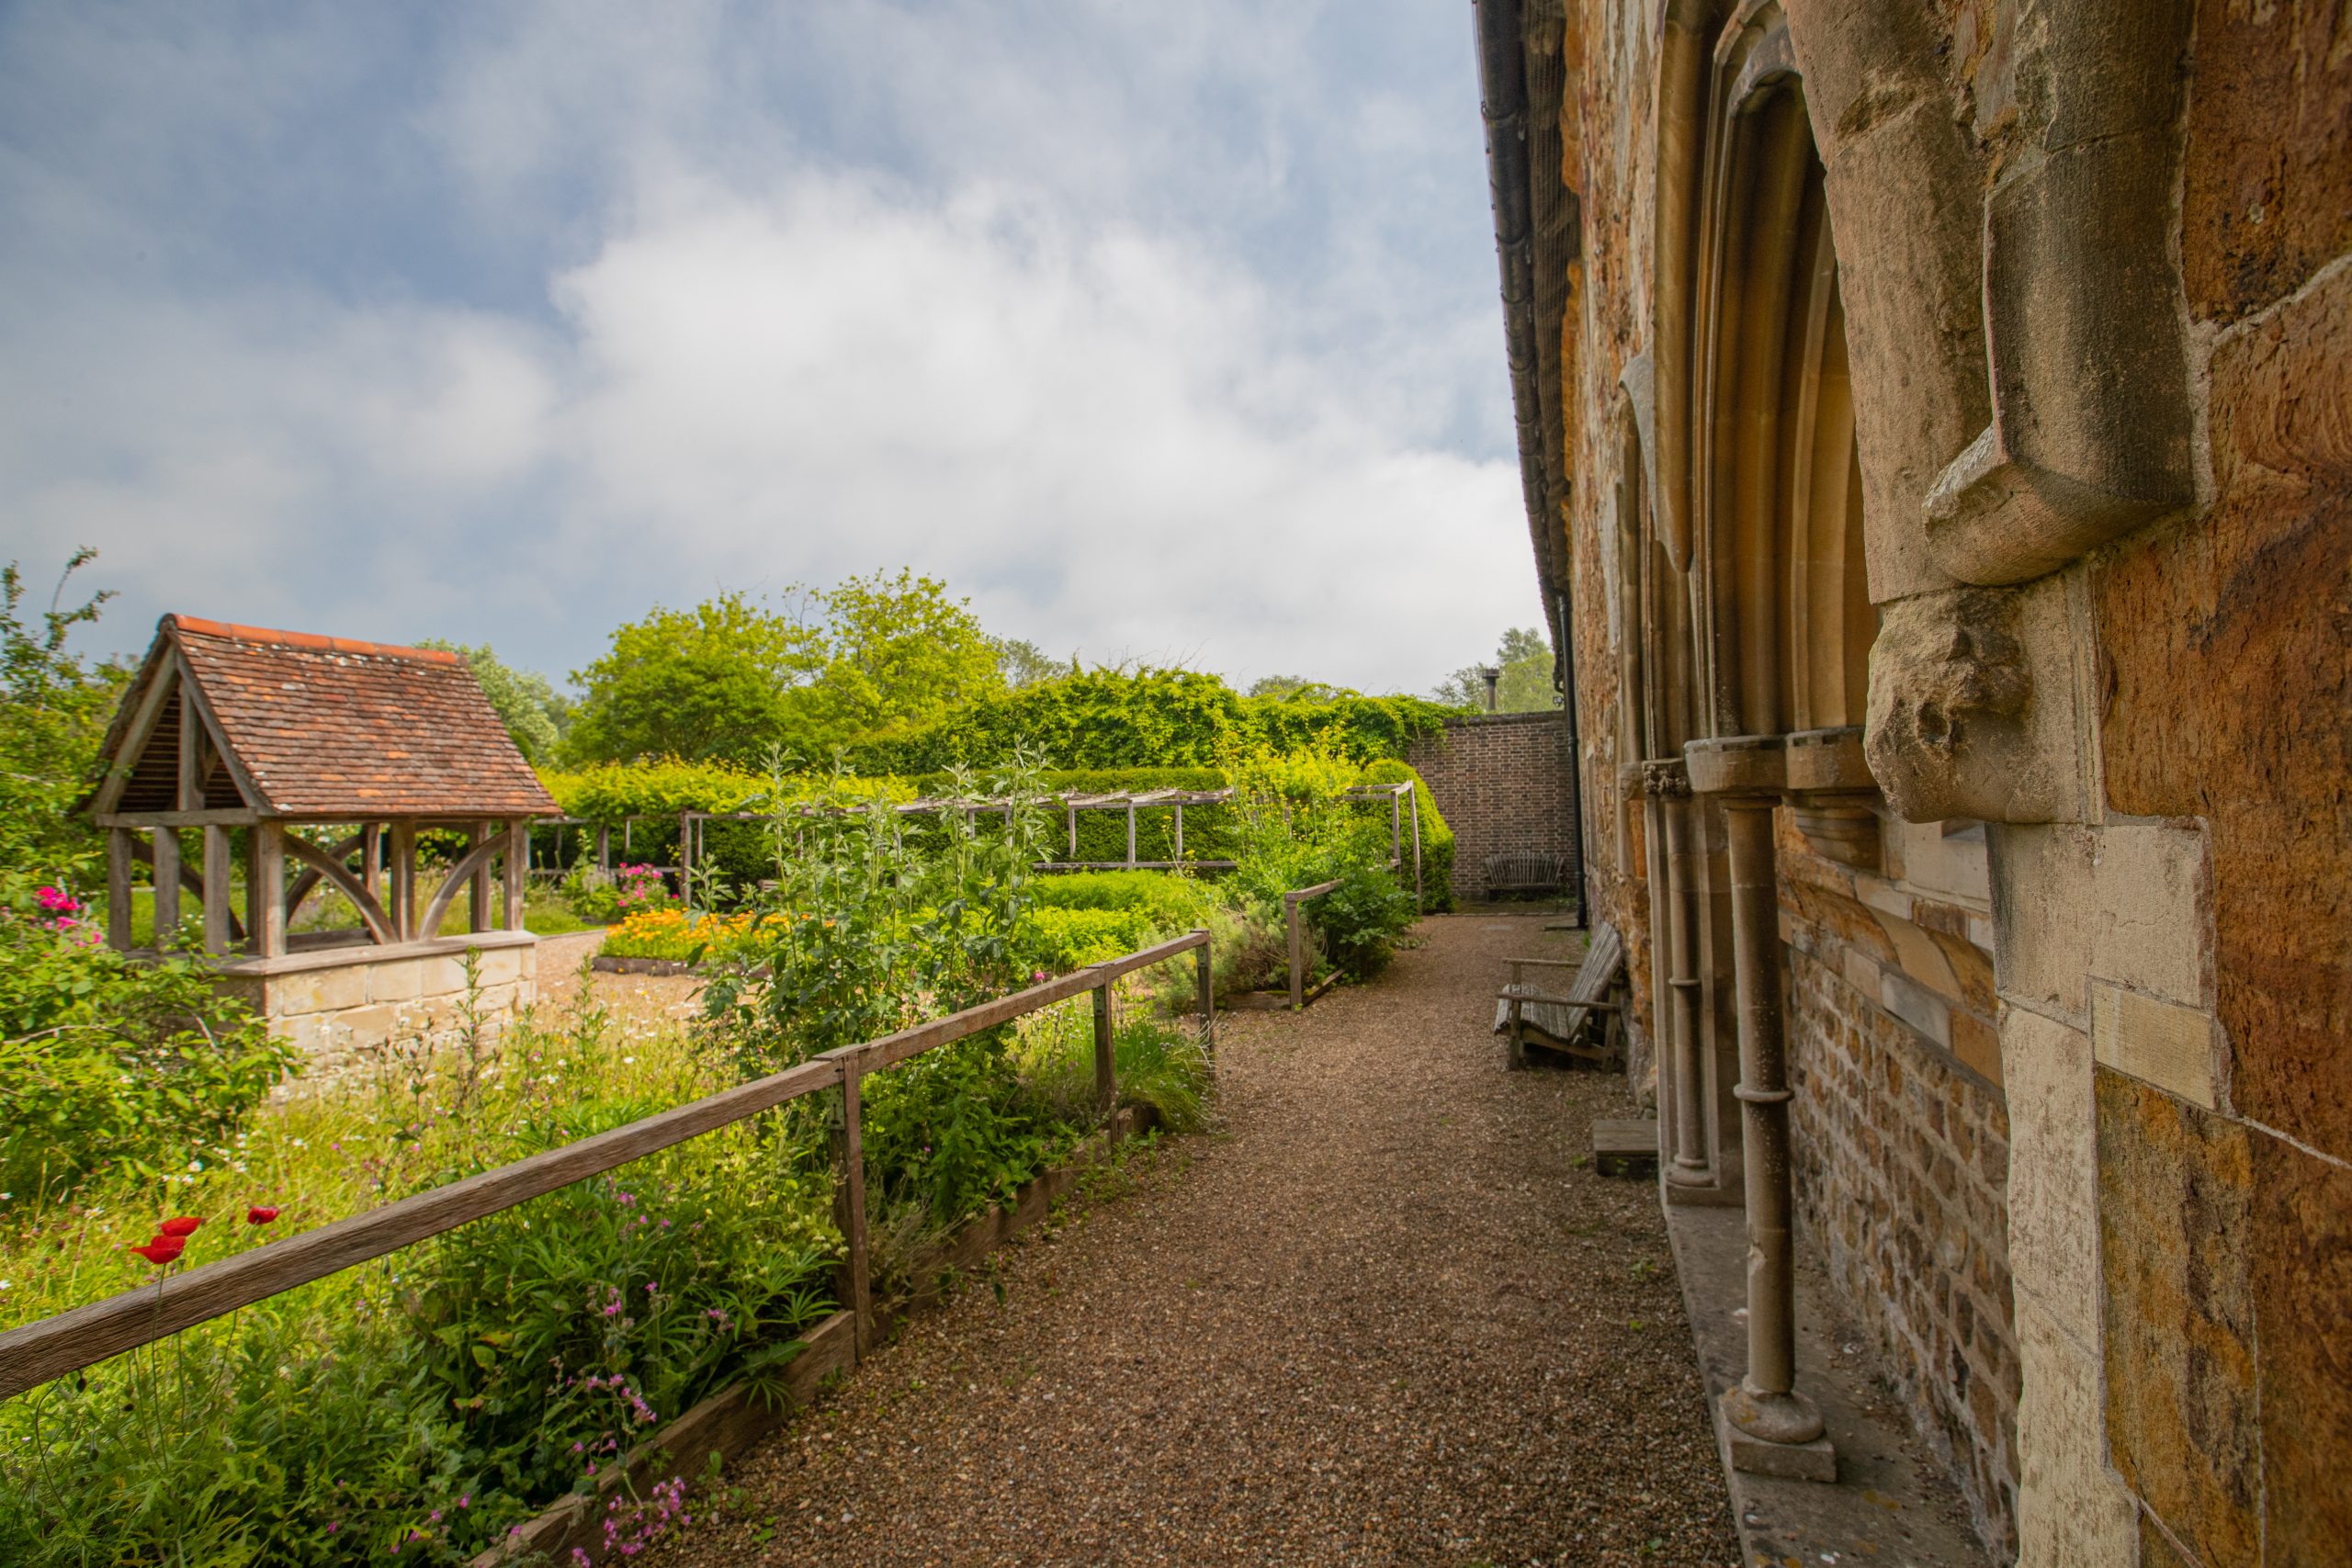 The cloister garden at Michelham Priory